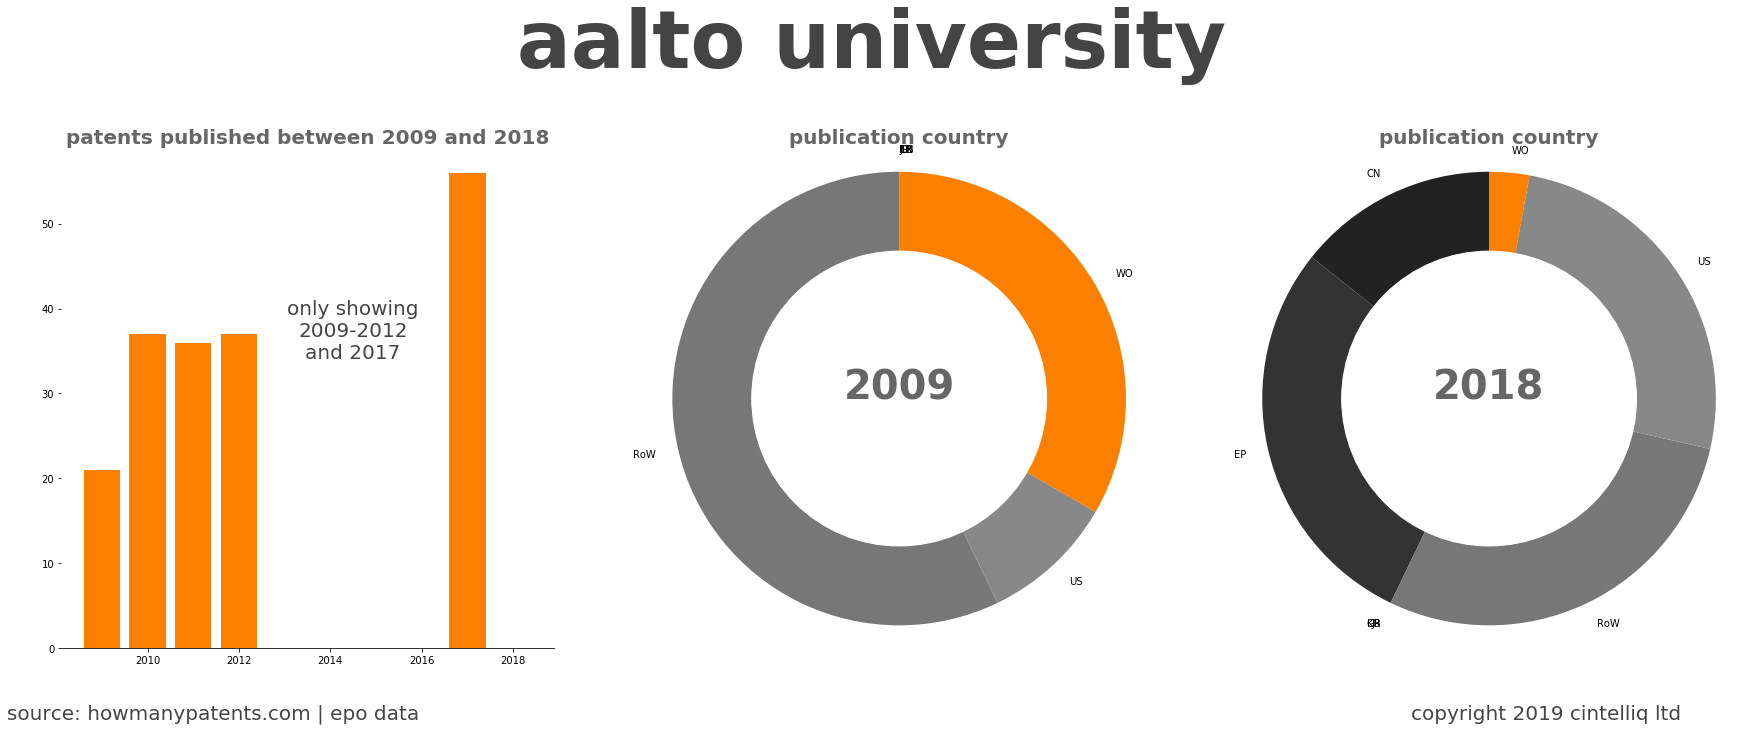 summary of patents for Aalto University